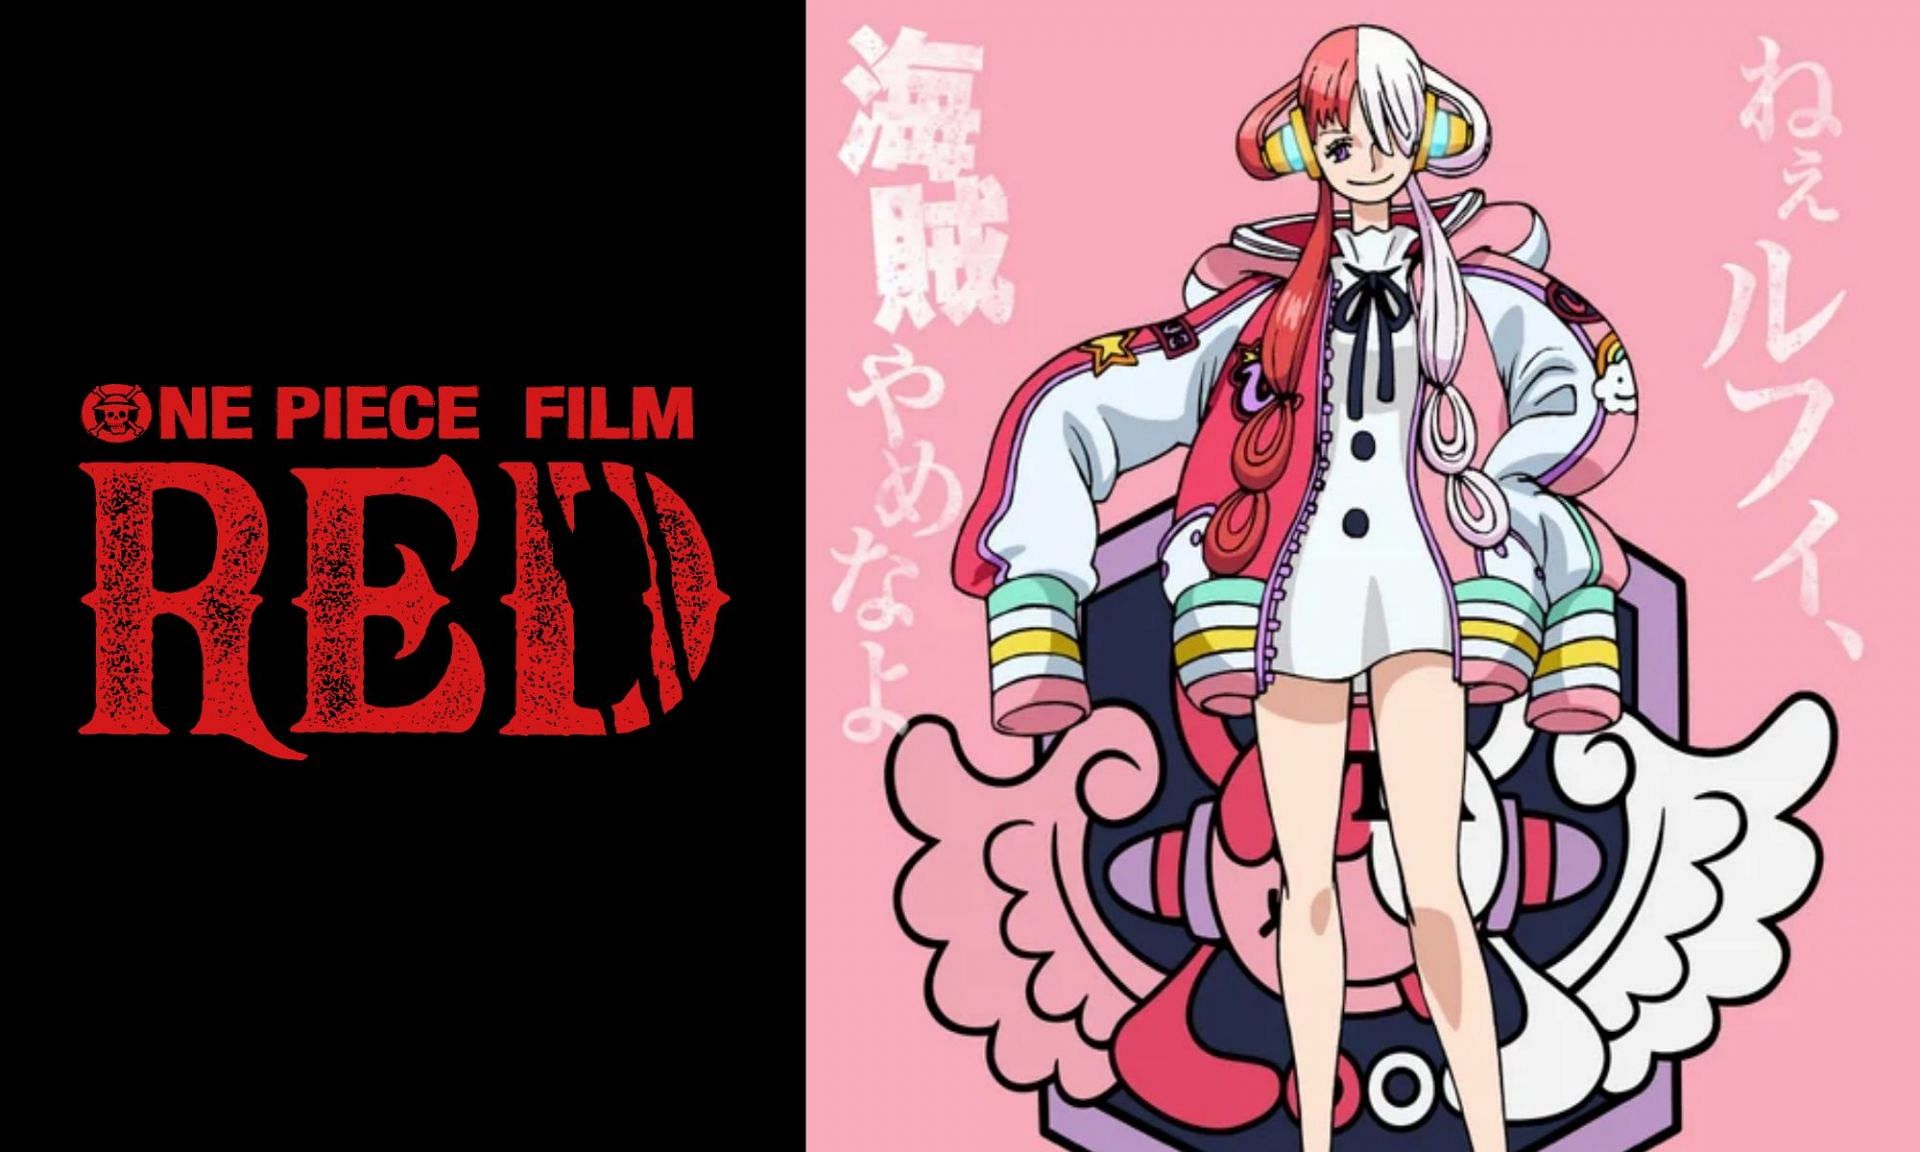 The latest key visual in One Piece Red (Image via Sportskeeda/Toei Animation)